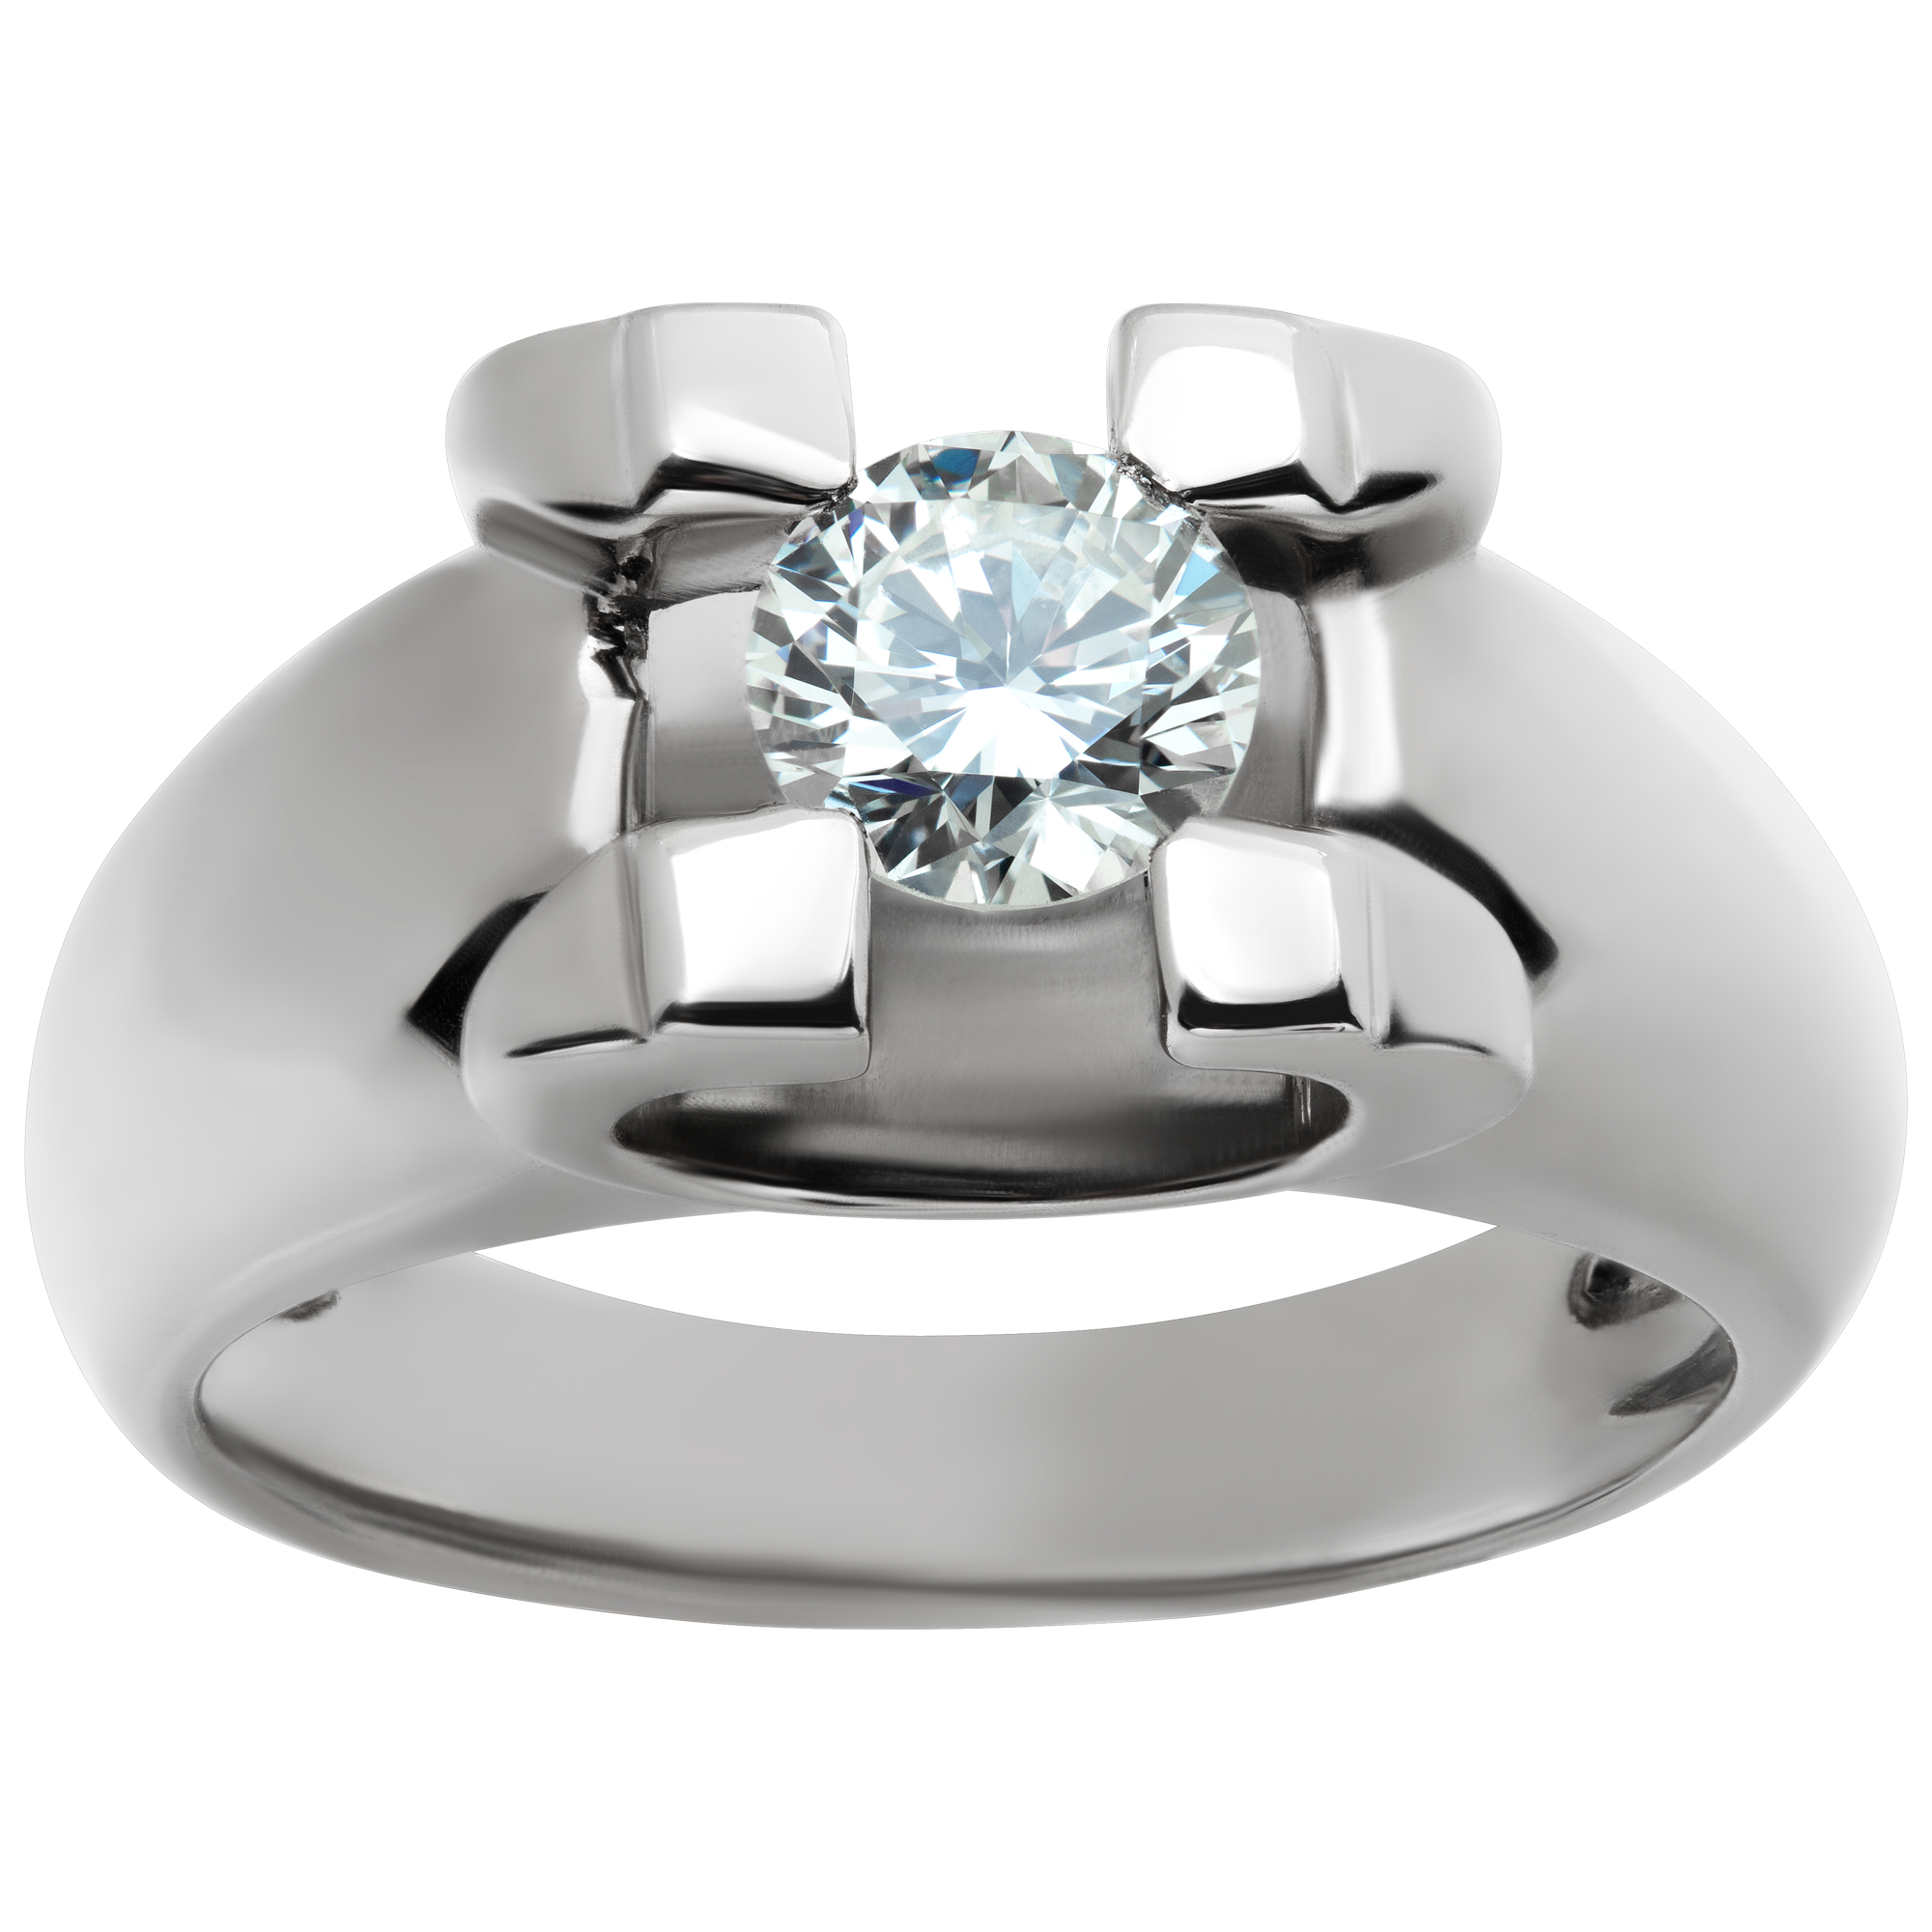 18k white gold diamond ring. 0.75 carat round diamond. (H color, VS2 clarity)